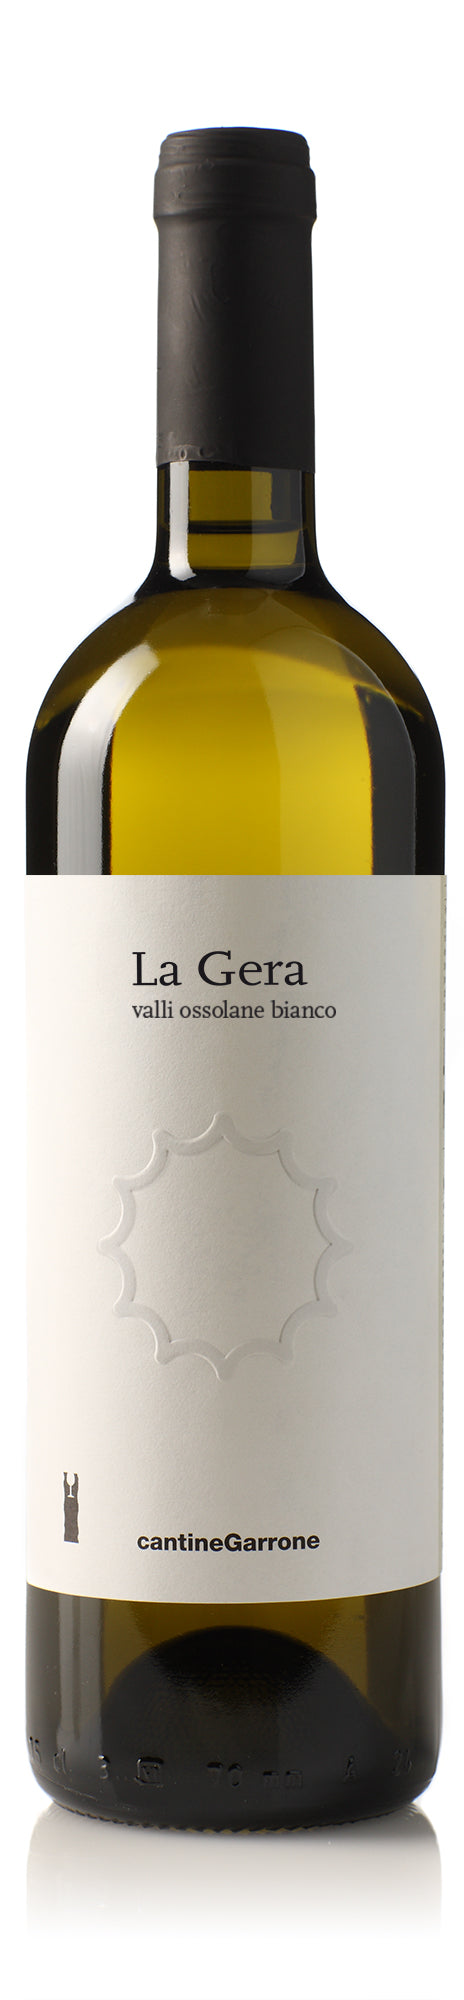 La Gera 2020 Ossola Valleys White Wine